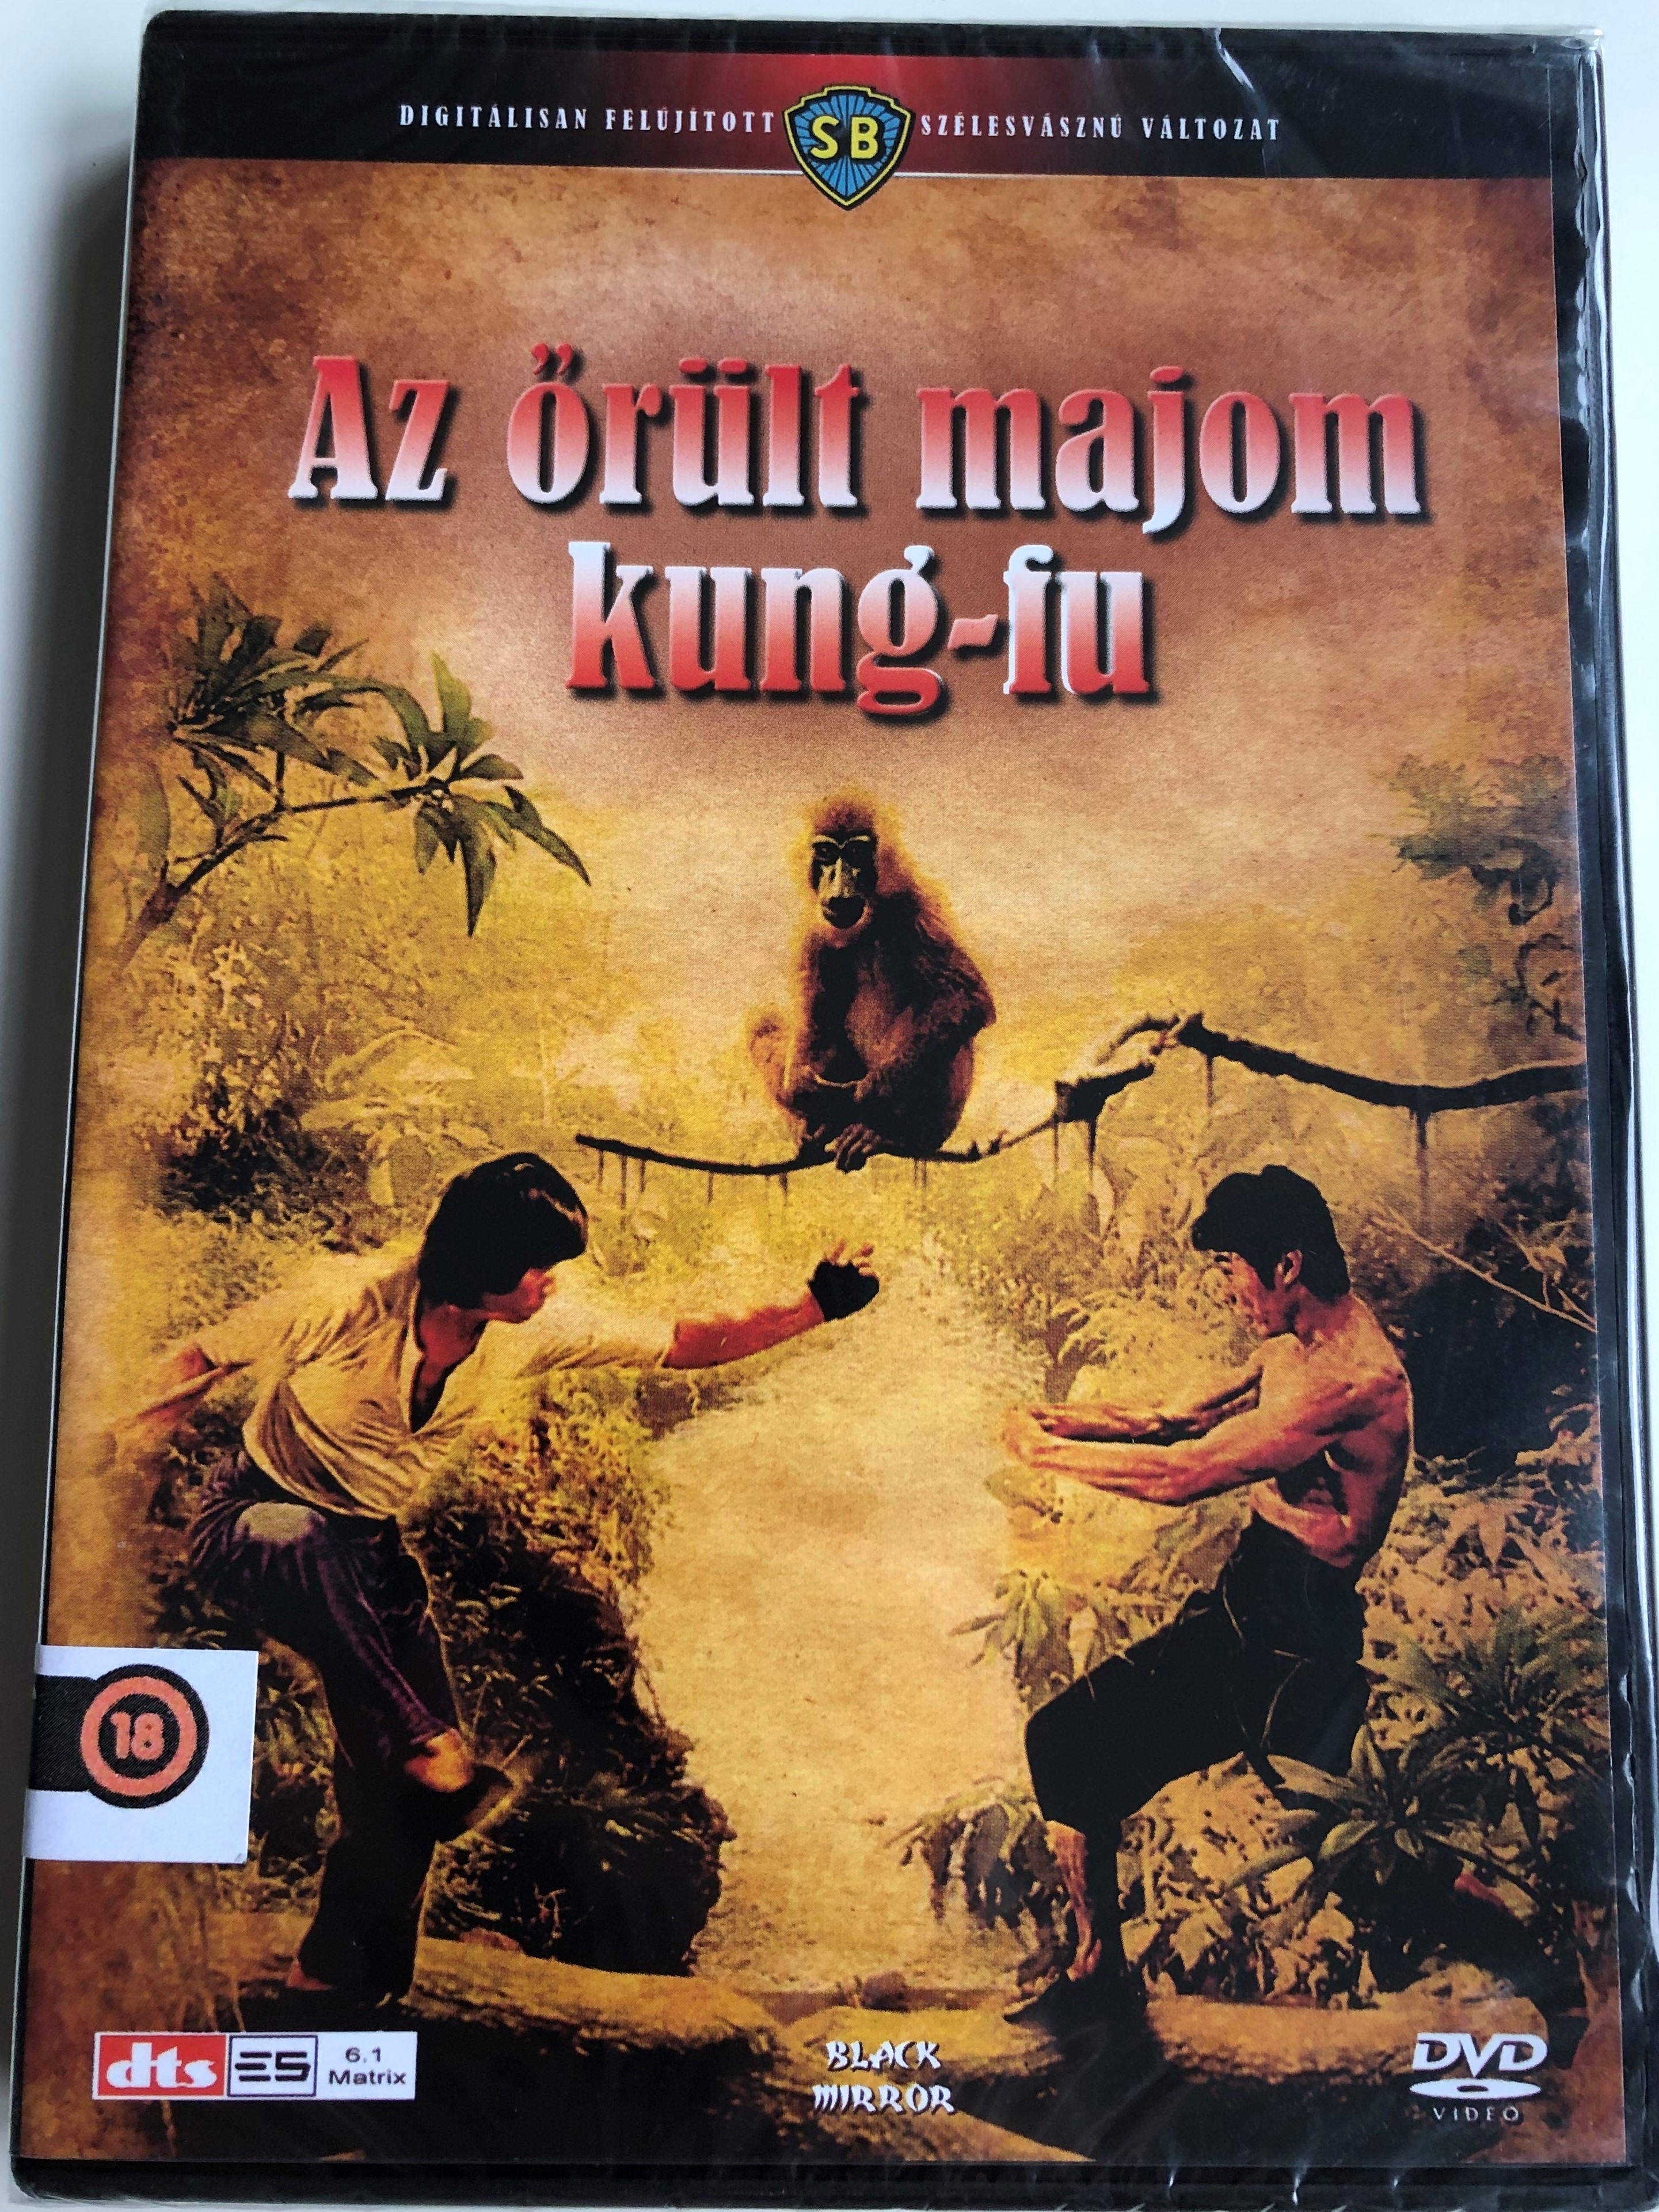 mad-monkey-kung-fu-feng-hou-dvd-1979-az-r-lt-majom-kung-fu-directed-by-chia-liang-liu-1.jpg